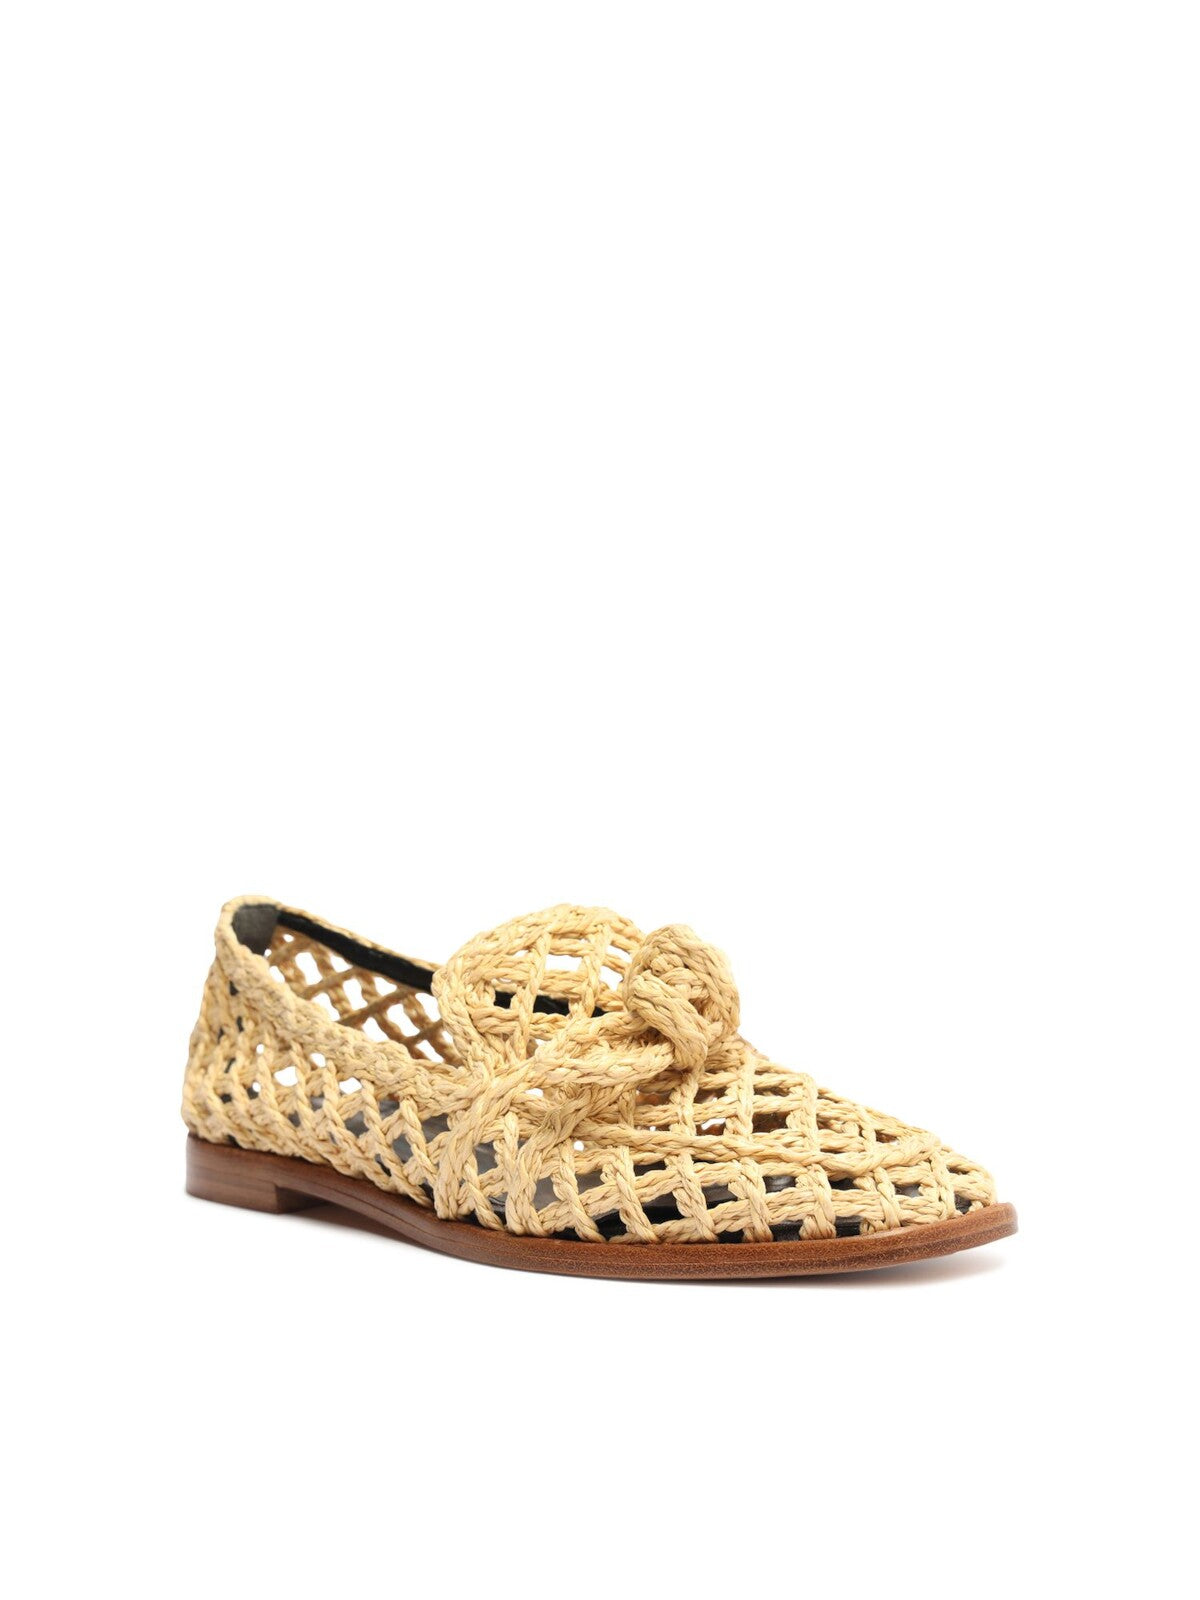 ALEXANDRE BIRMAN Womens Beige Rafia Knot Detail Woven Padded Clarita Square Toe Slip On Leather Loafers Shoes 35.5